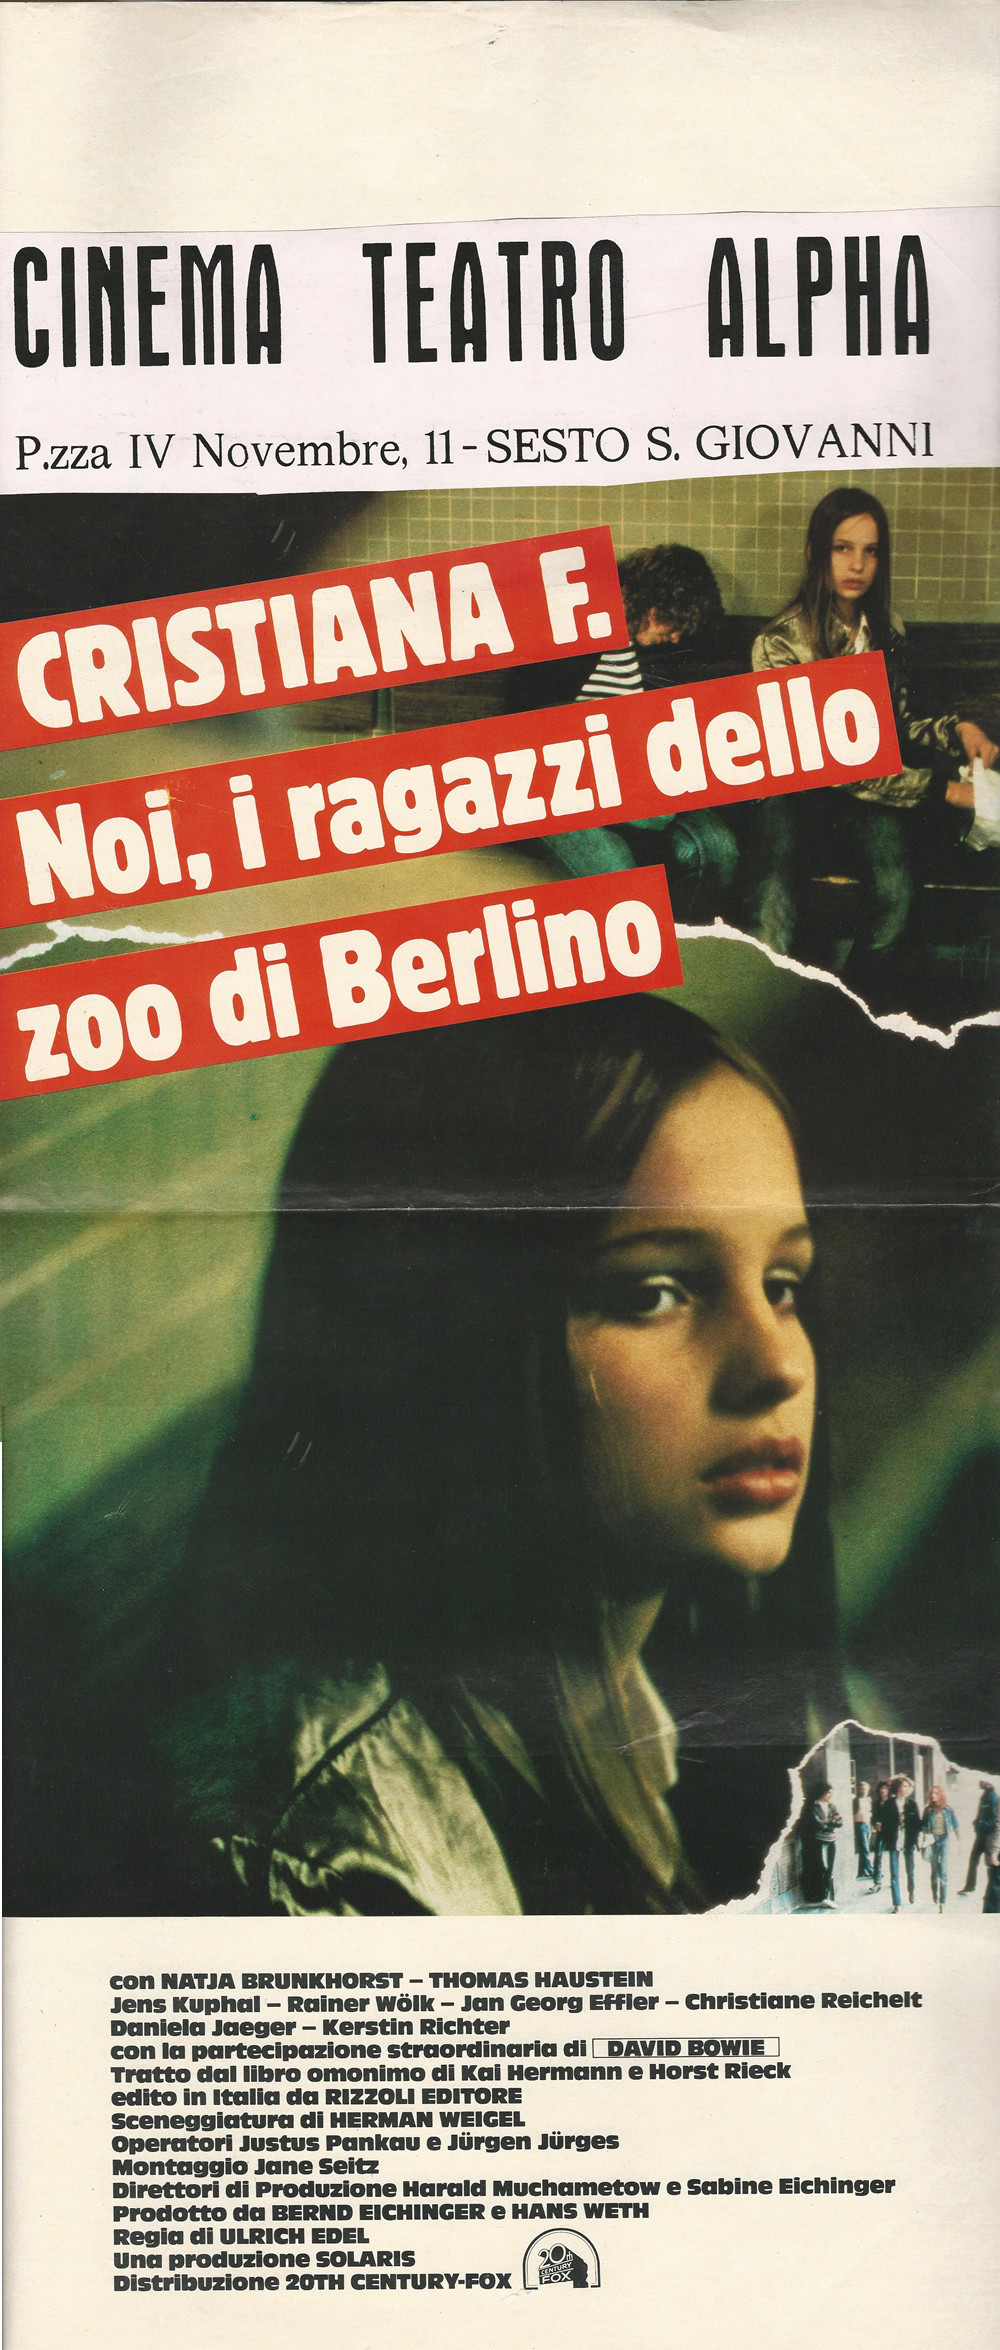 1981 * Locandina Cinema Christiane F. - Noi i ragazzi dello zoo di Berlino  - N Brunckhorst Dramma (B) - Mynumi